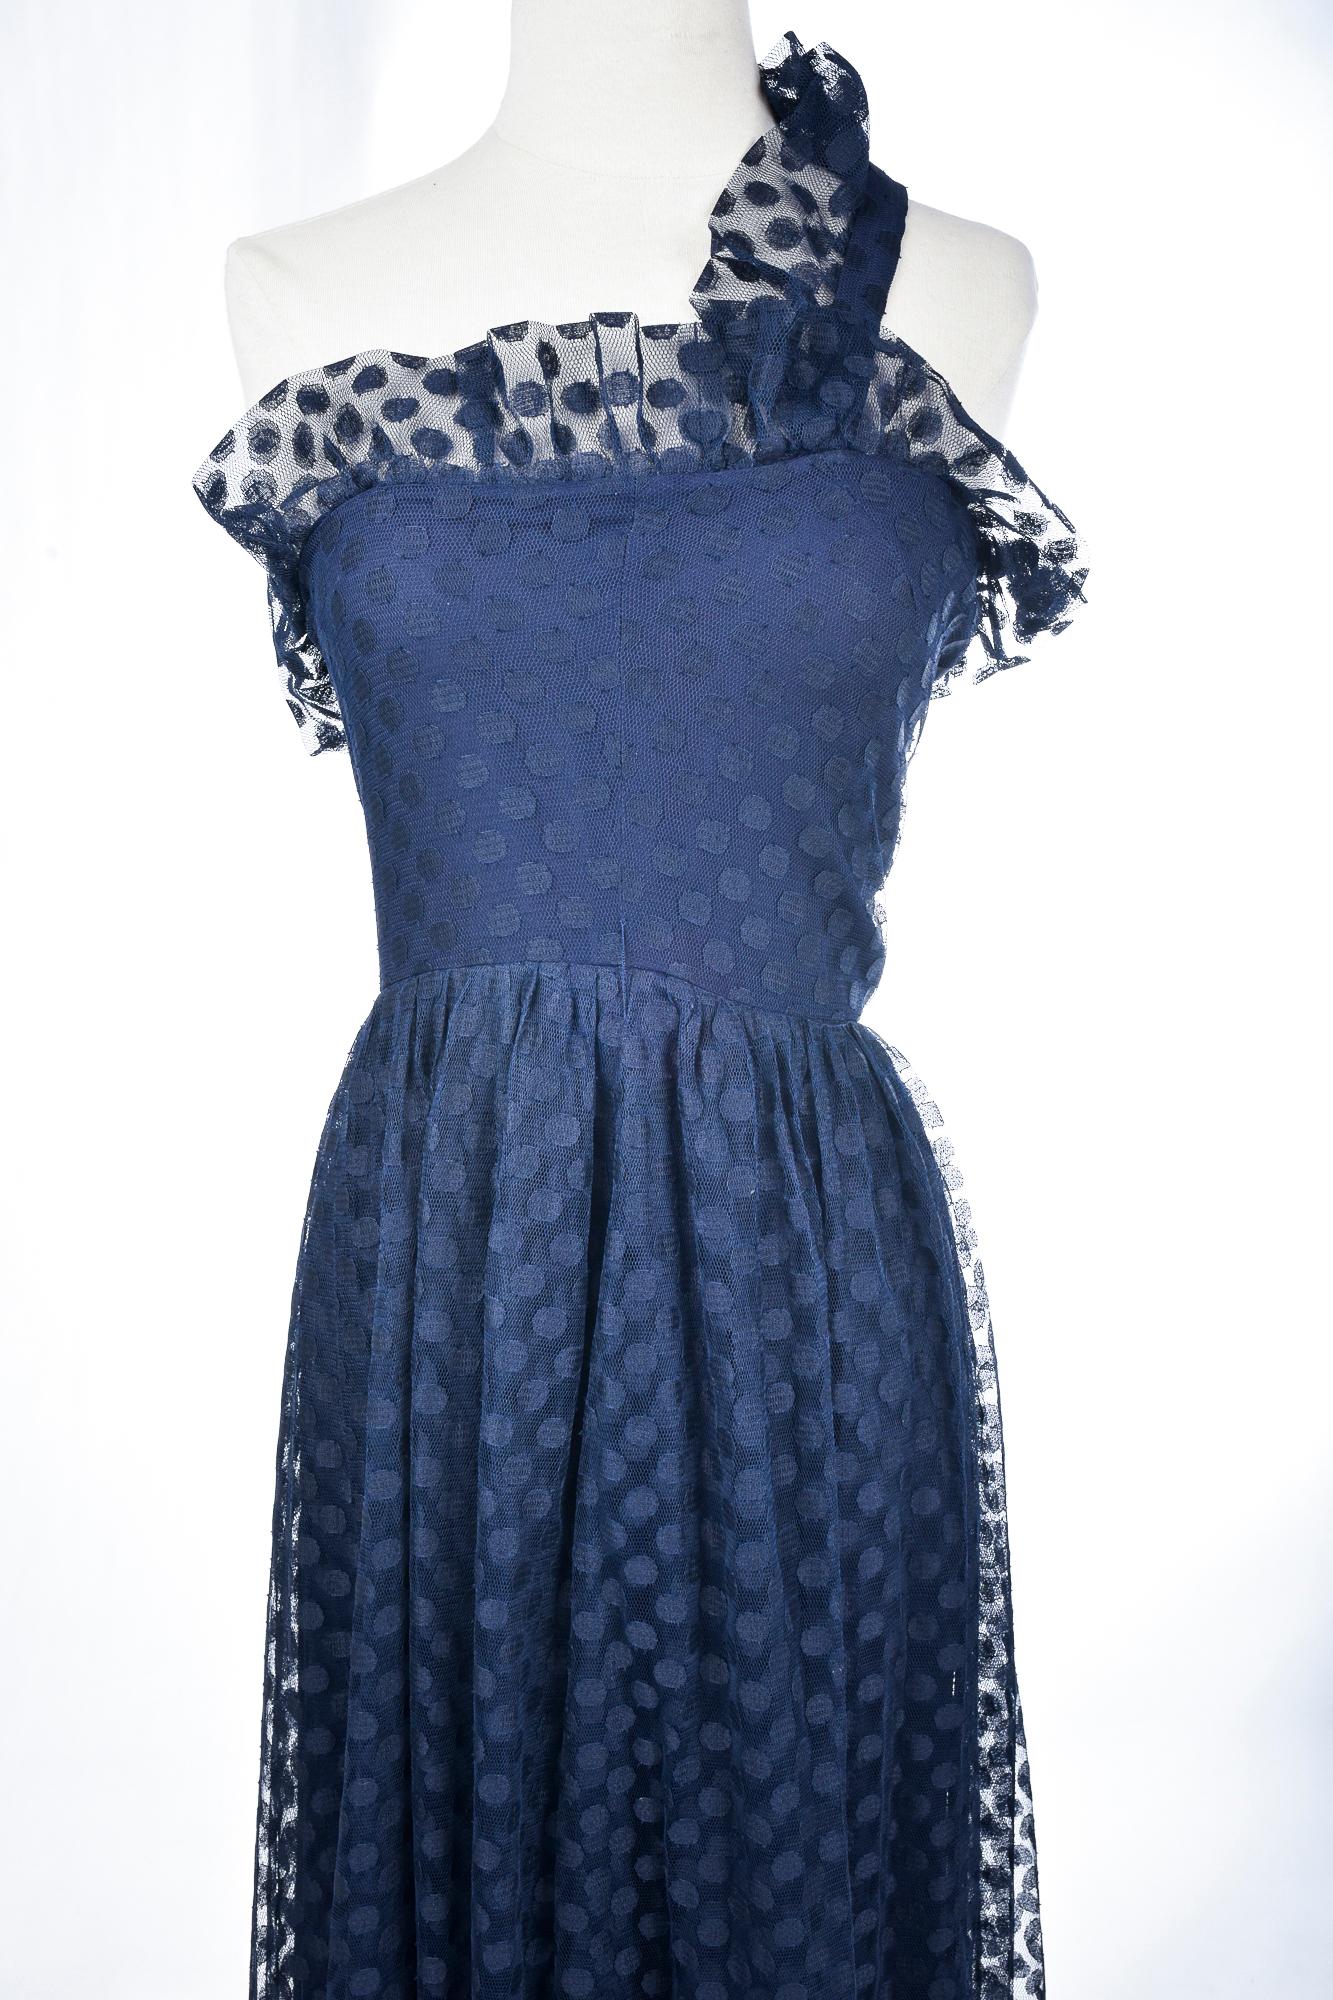 Women's A Jean-Louis Sherrer Evening  Dress in Navy Polka dots Net Circa 1980 For Sale